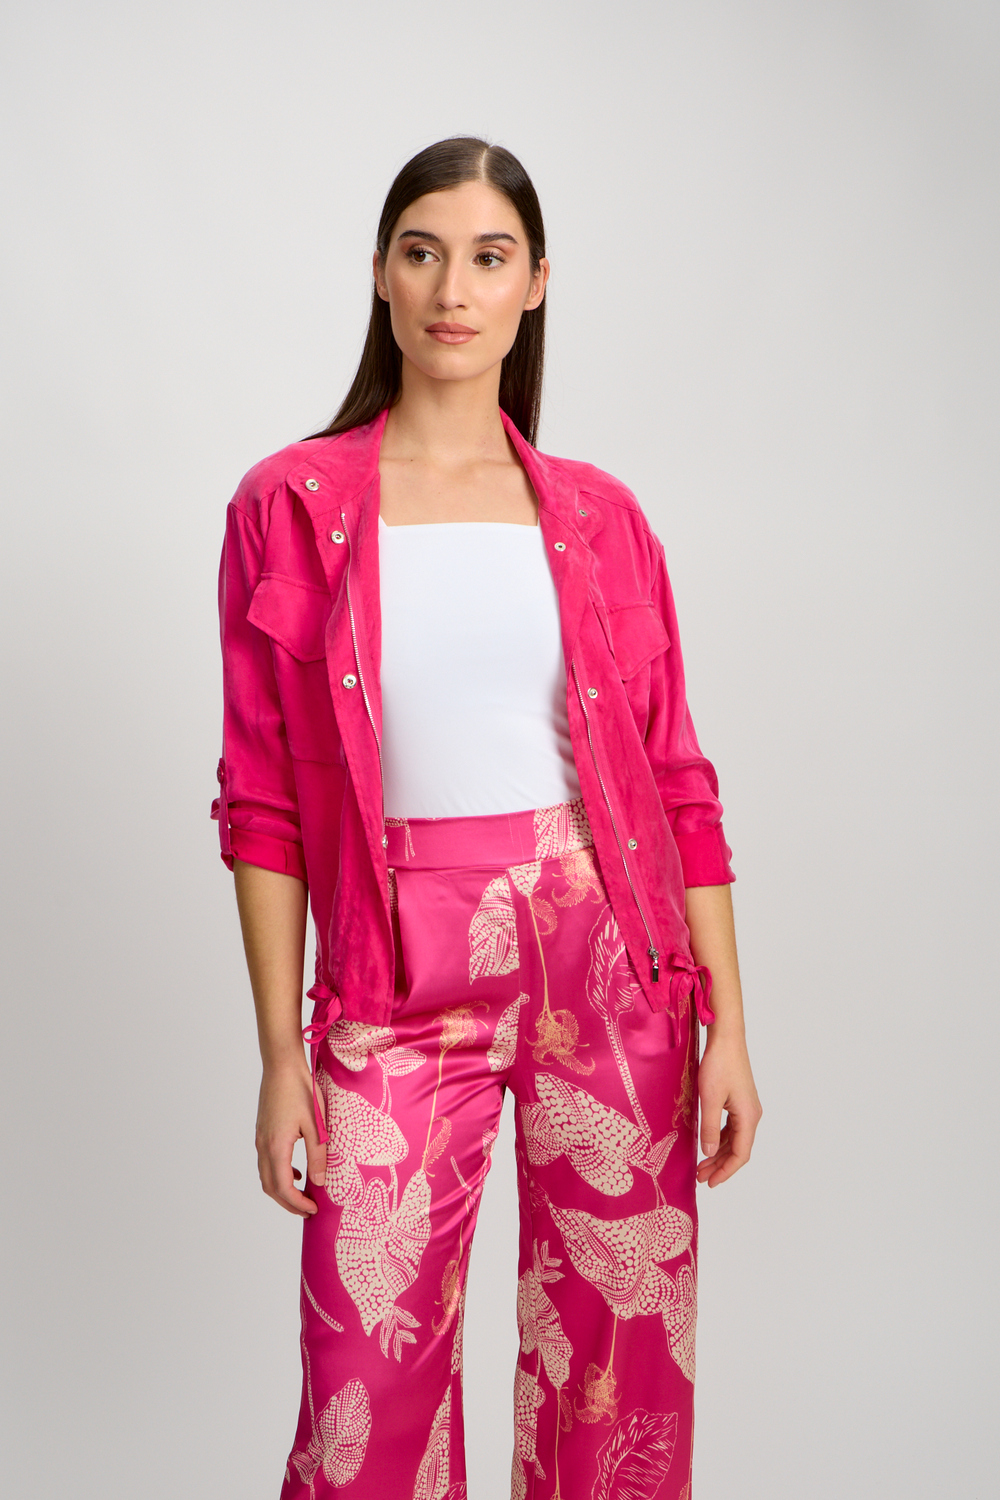 Oversized Casual Everyday Jacket Style 80908-6100. Pink